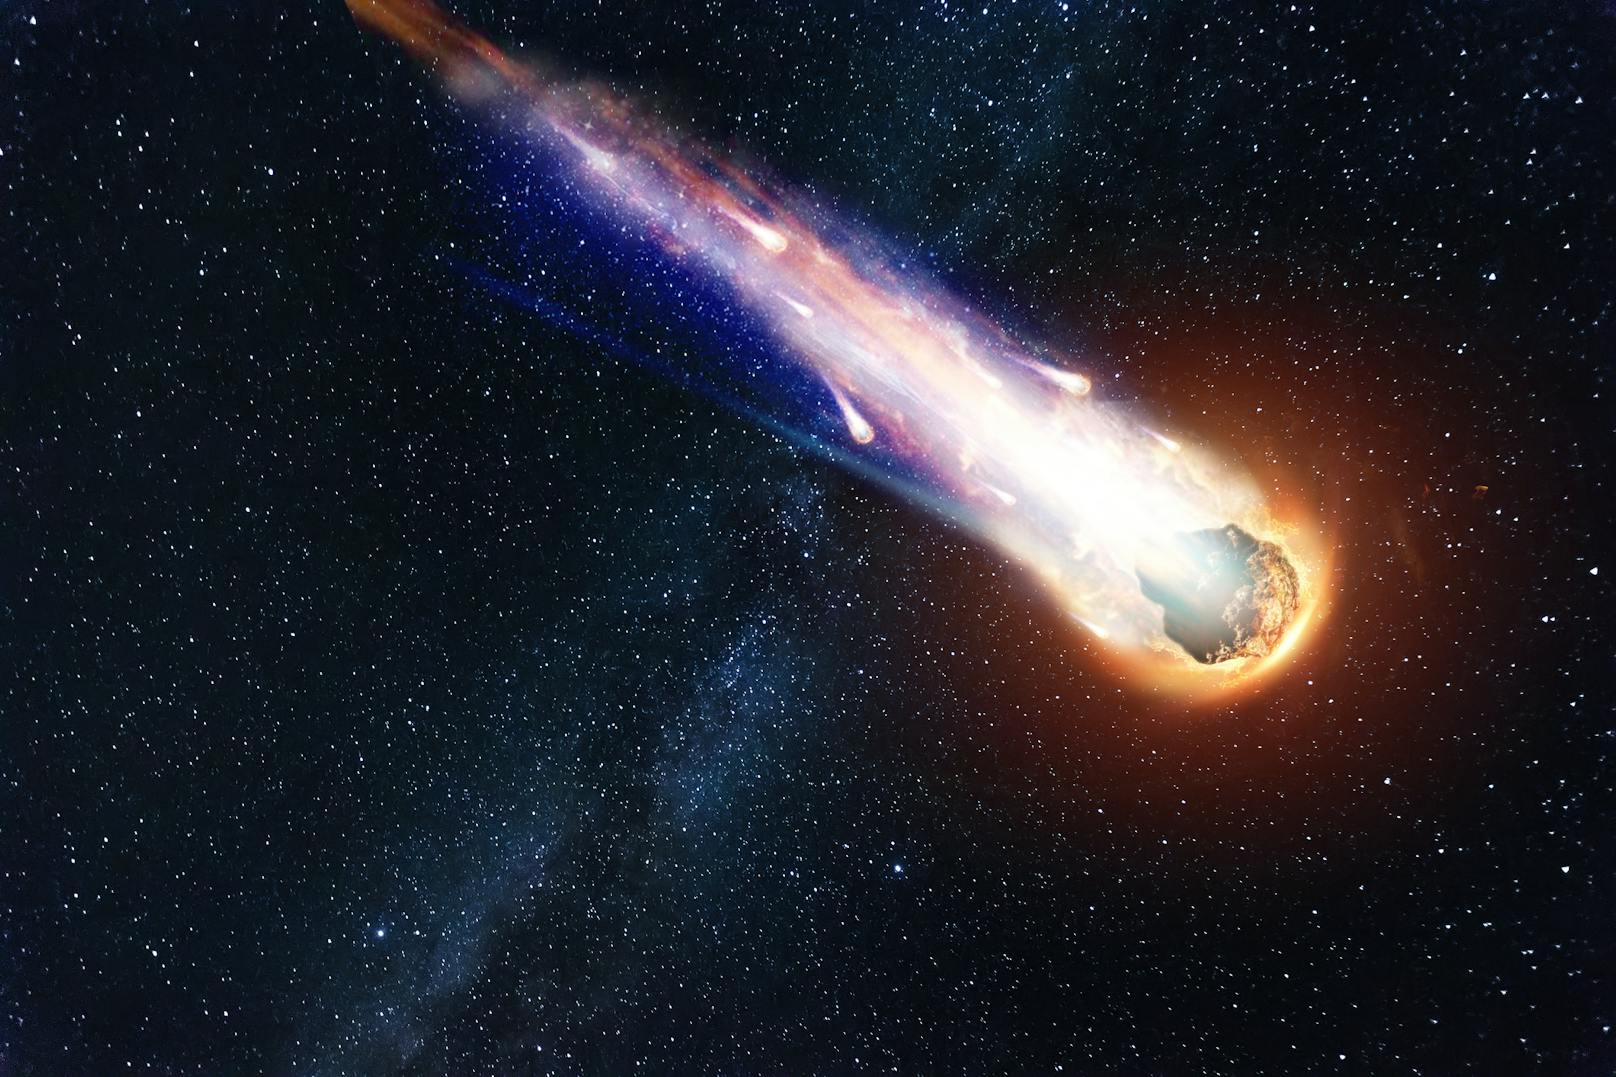 Asteroid rast bald knapp an Erde vorbei